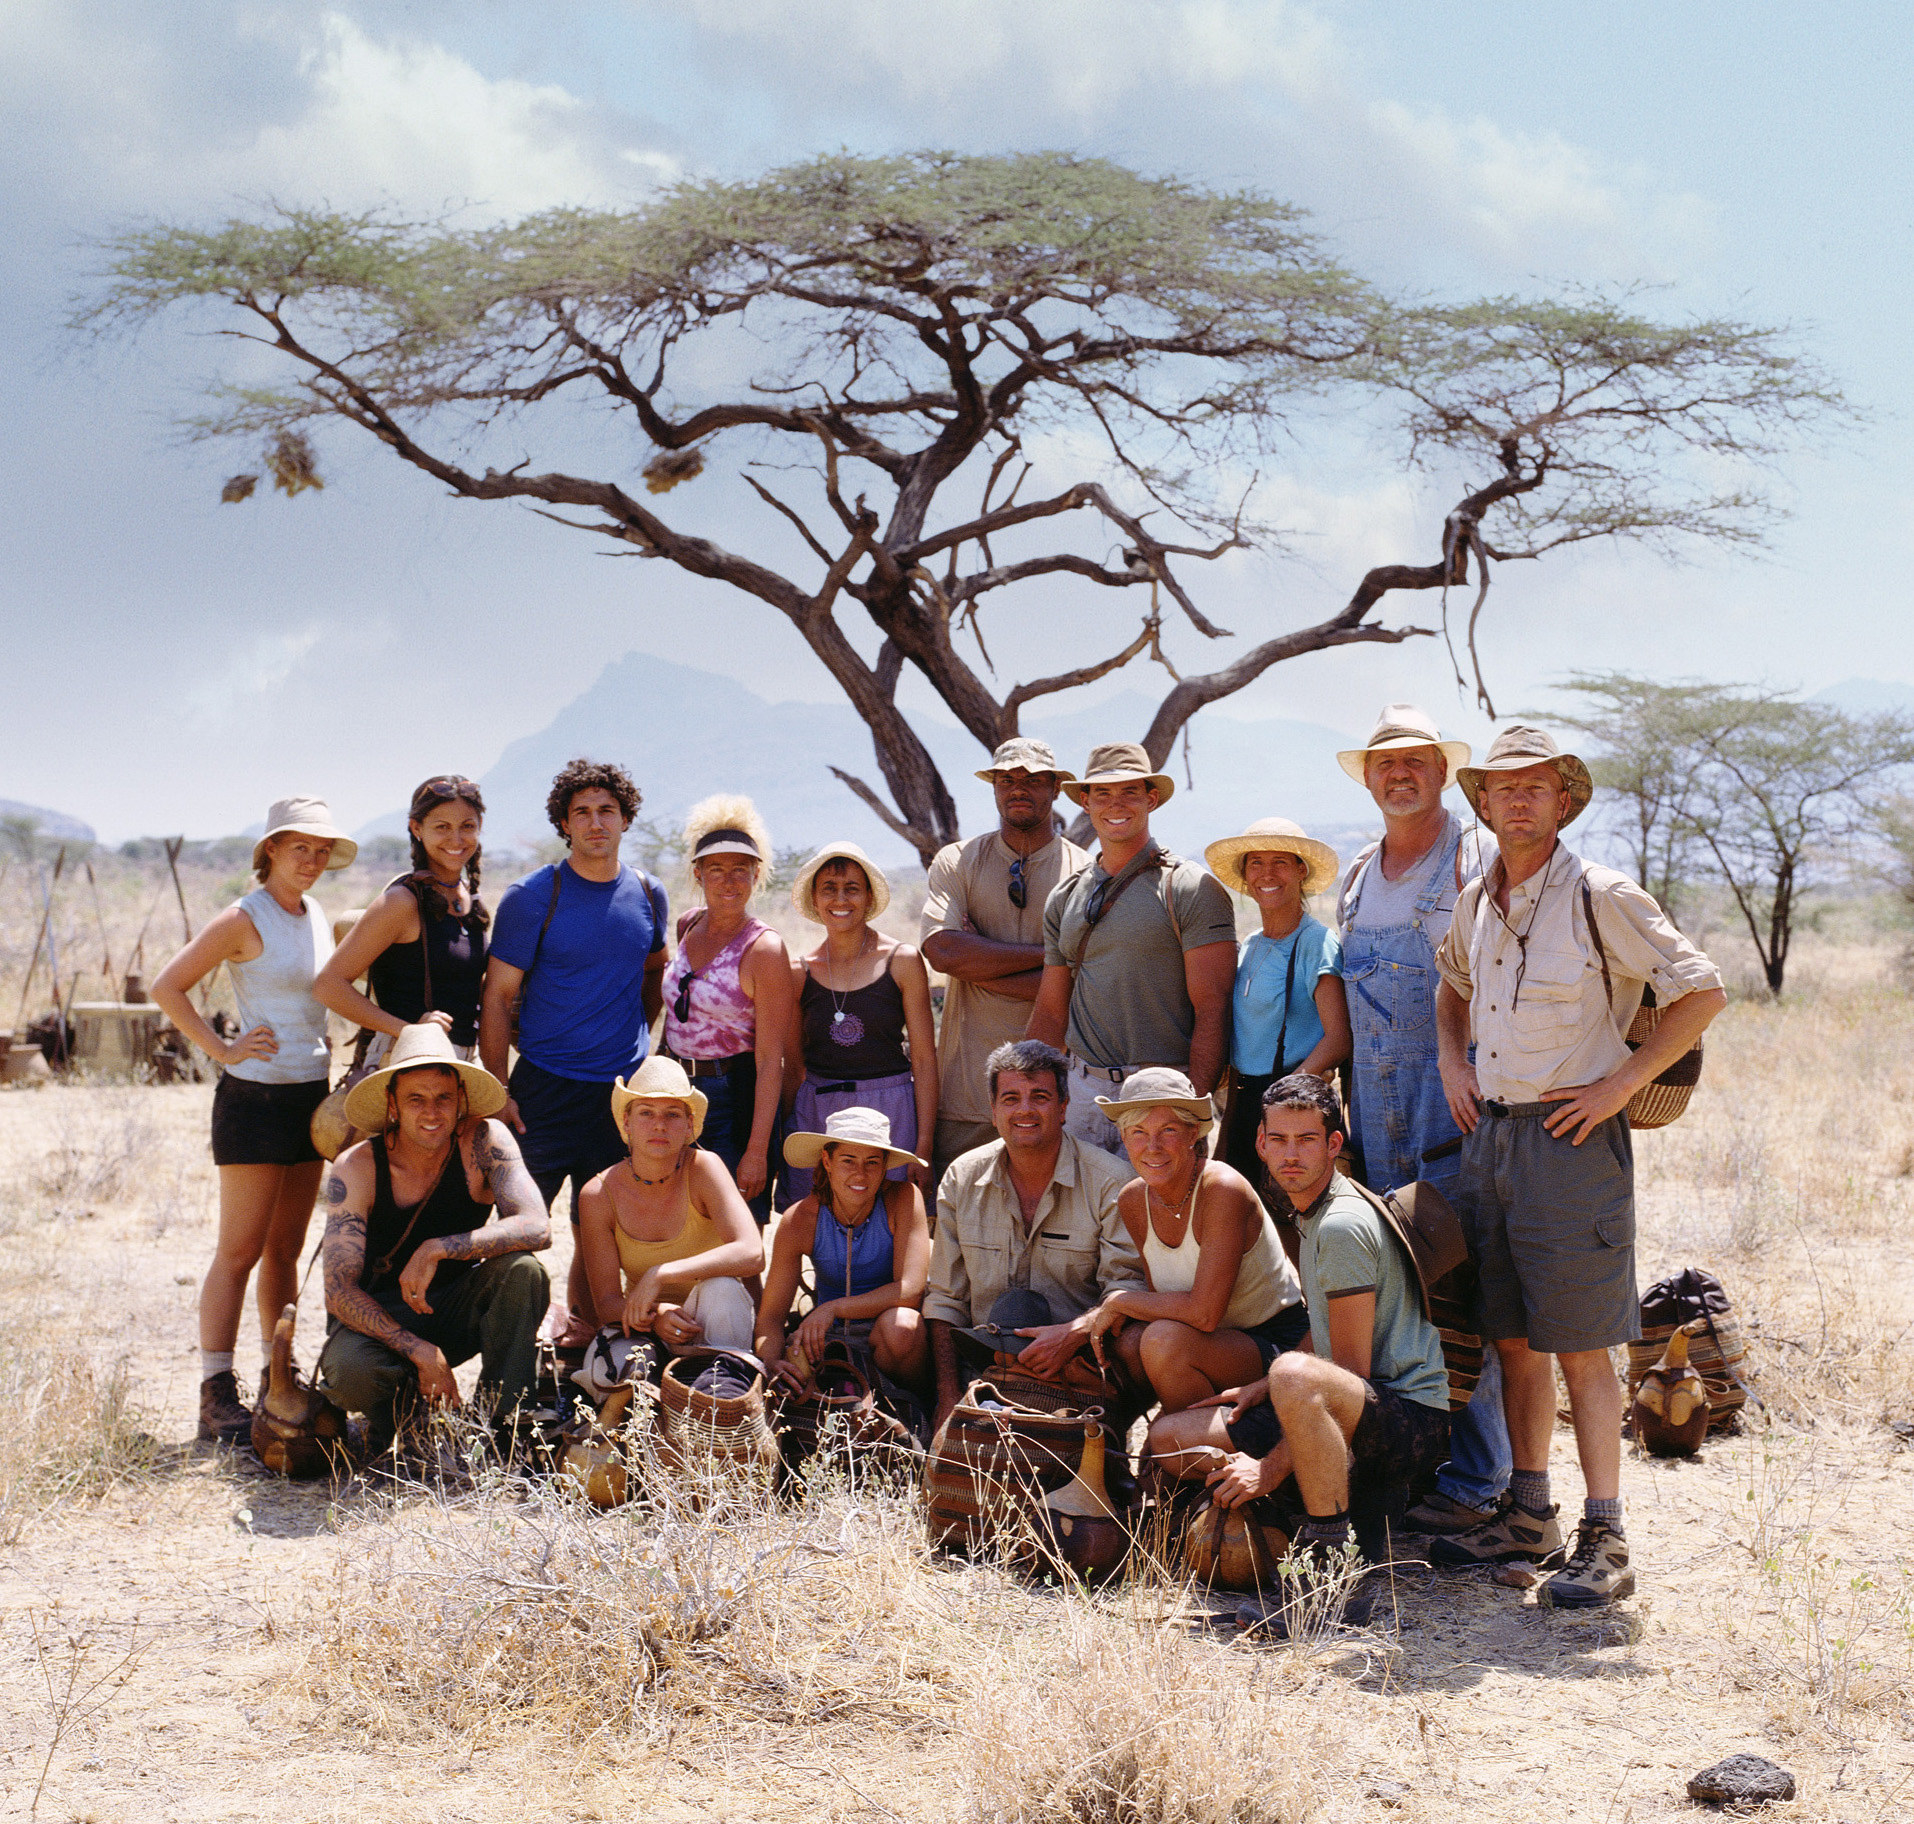 The cast of Survivor: Africa